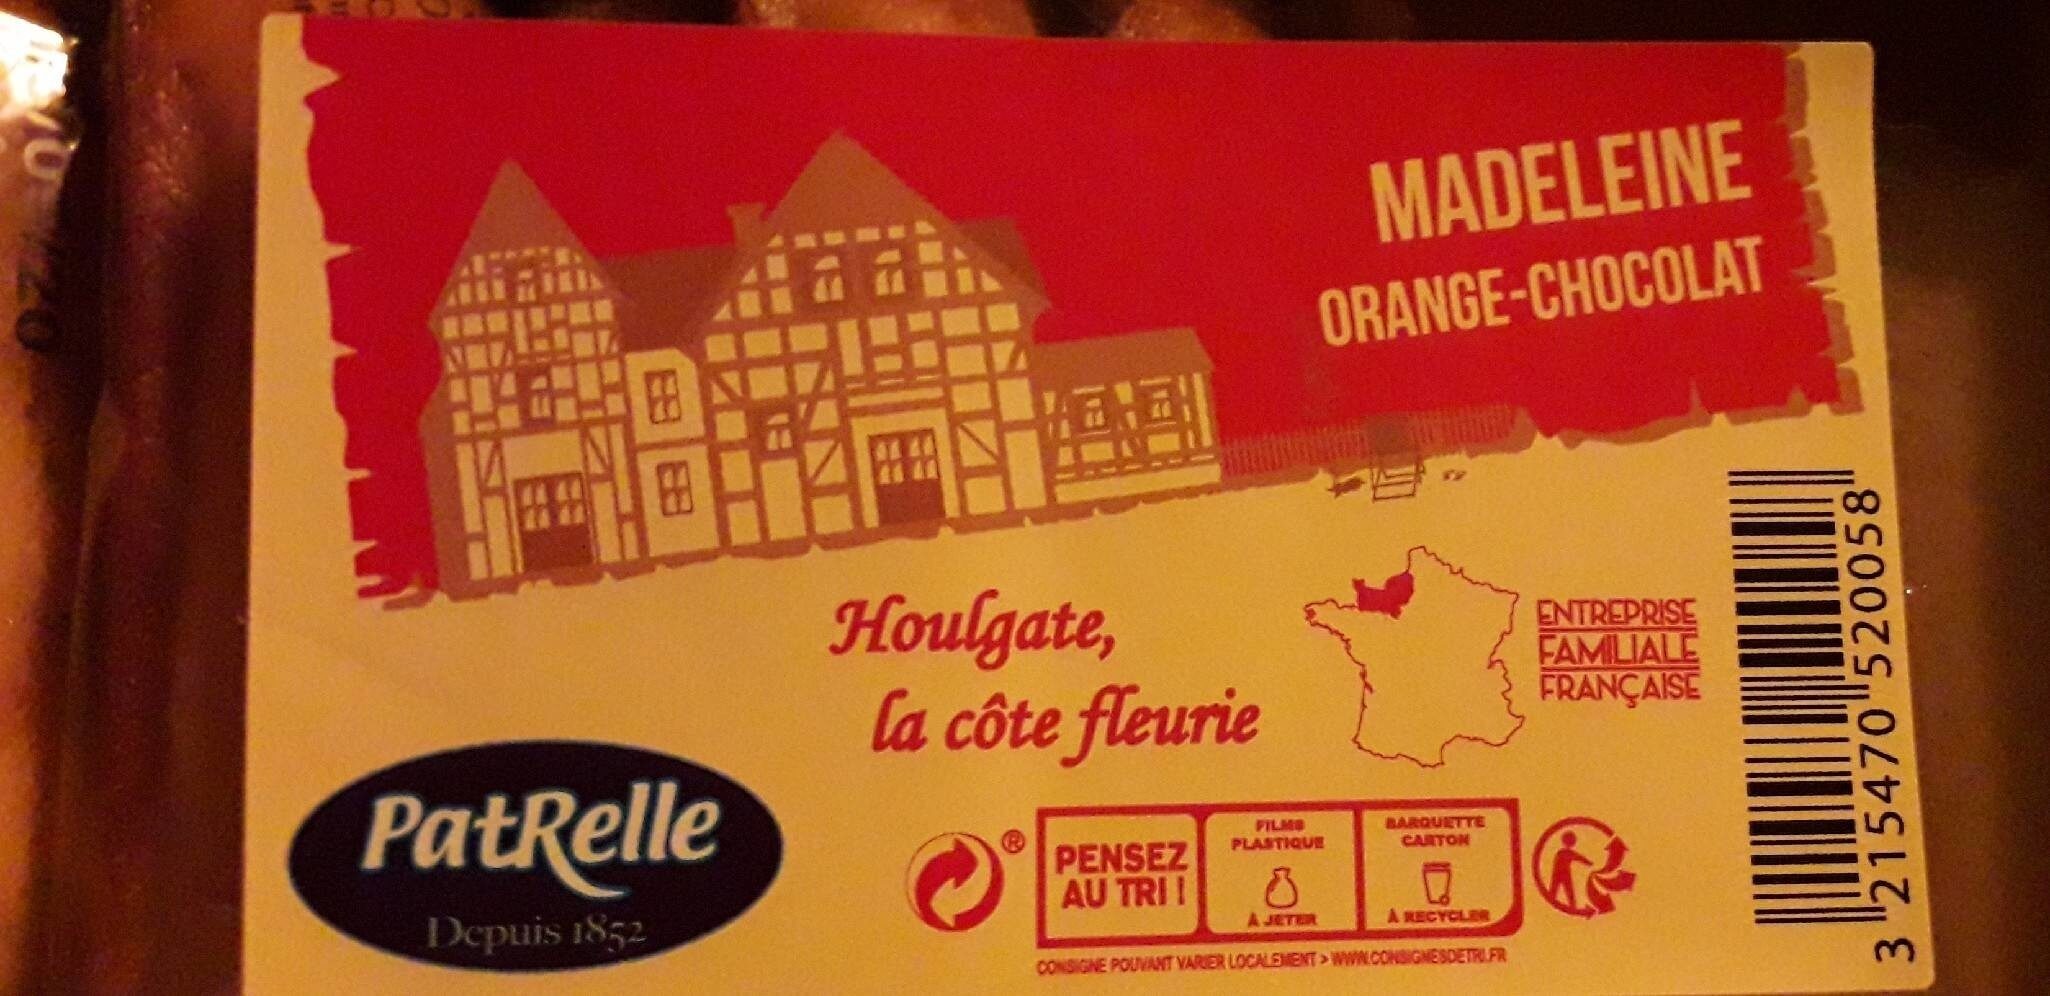 Madeleine orange chocolat - Produit